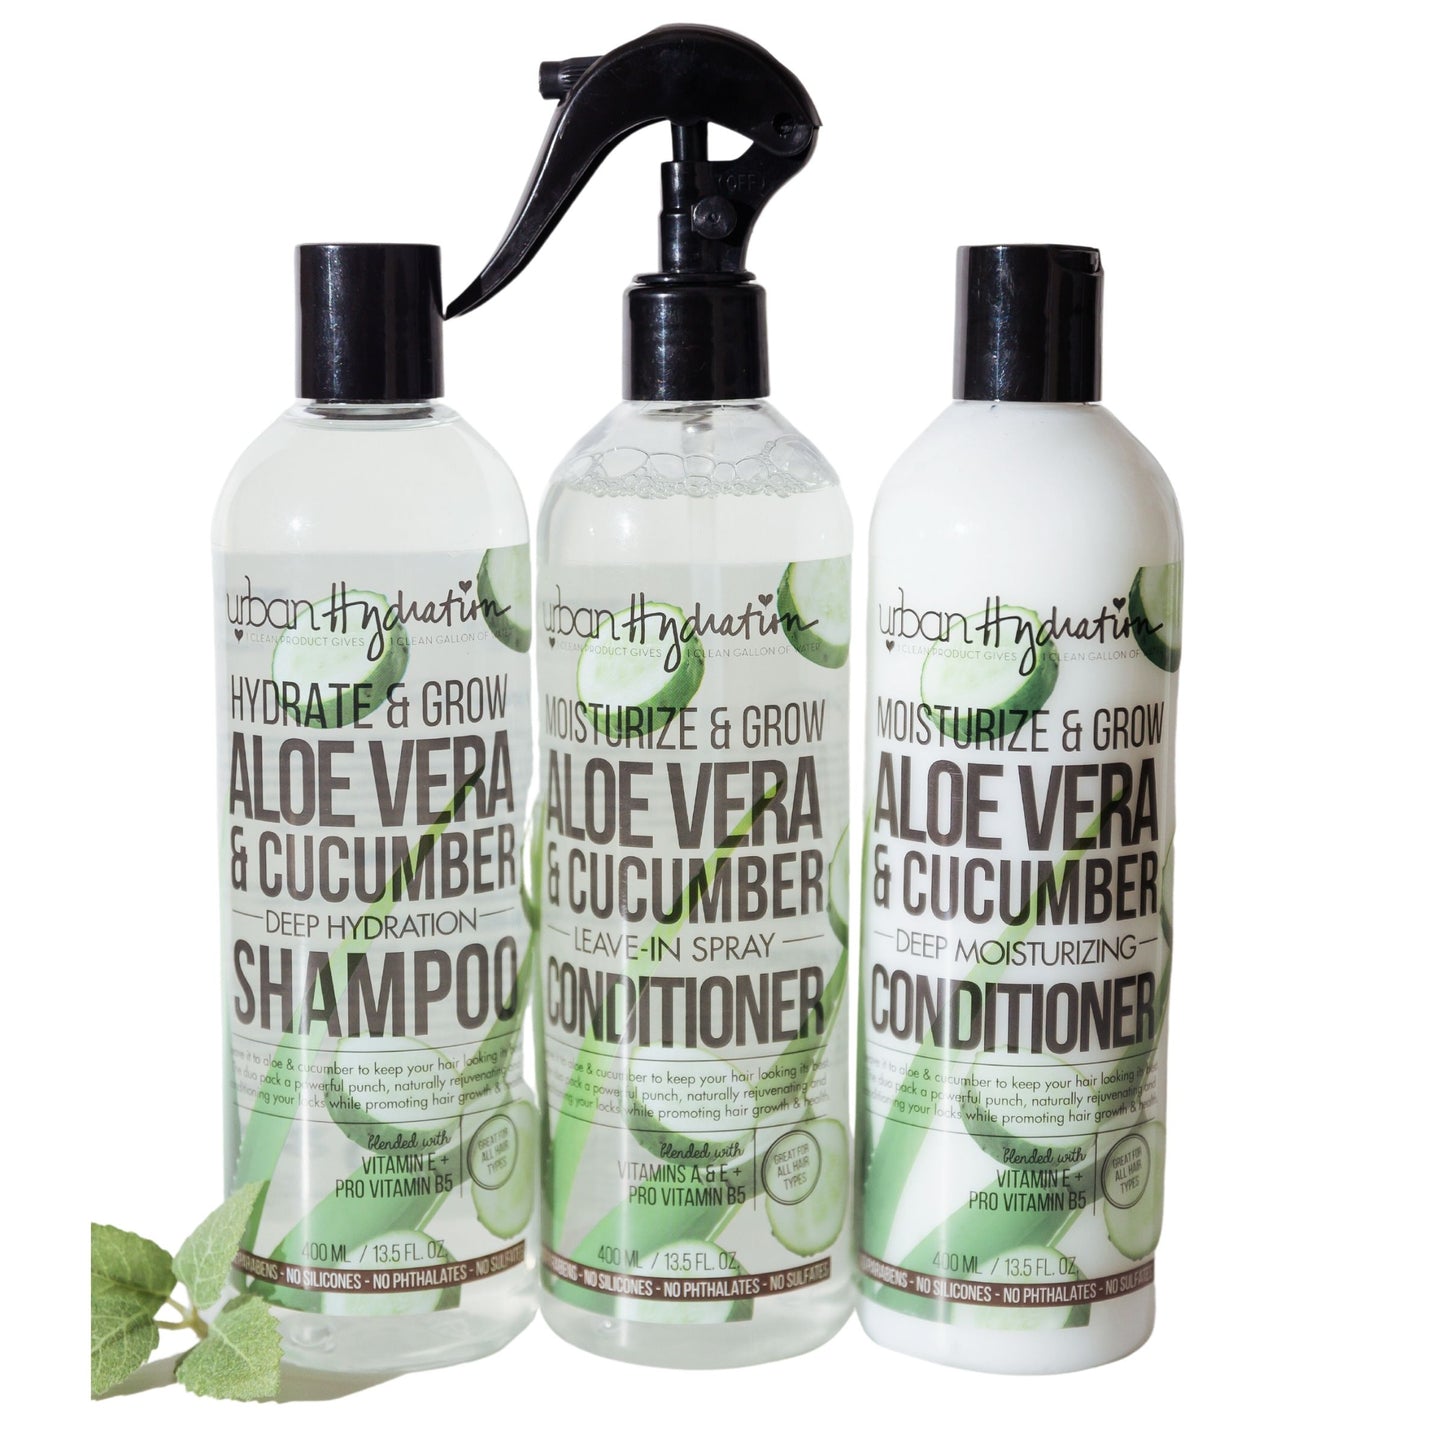 & Grow Aloe Vera & Cucumber Leave-in Spray Conditioner – Urban Hydration